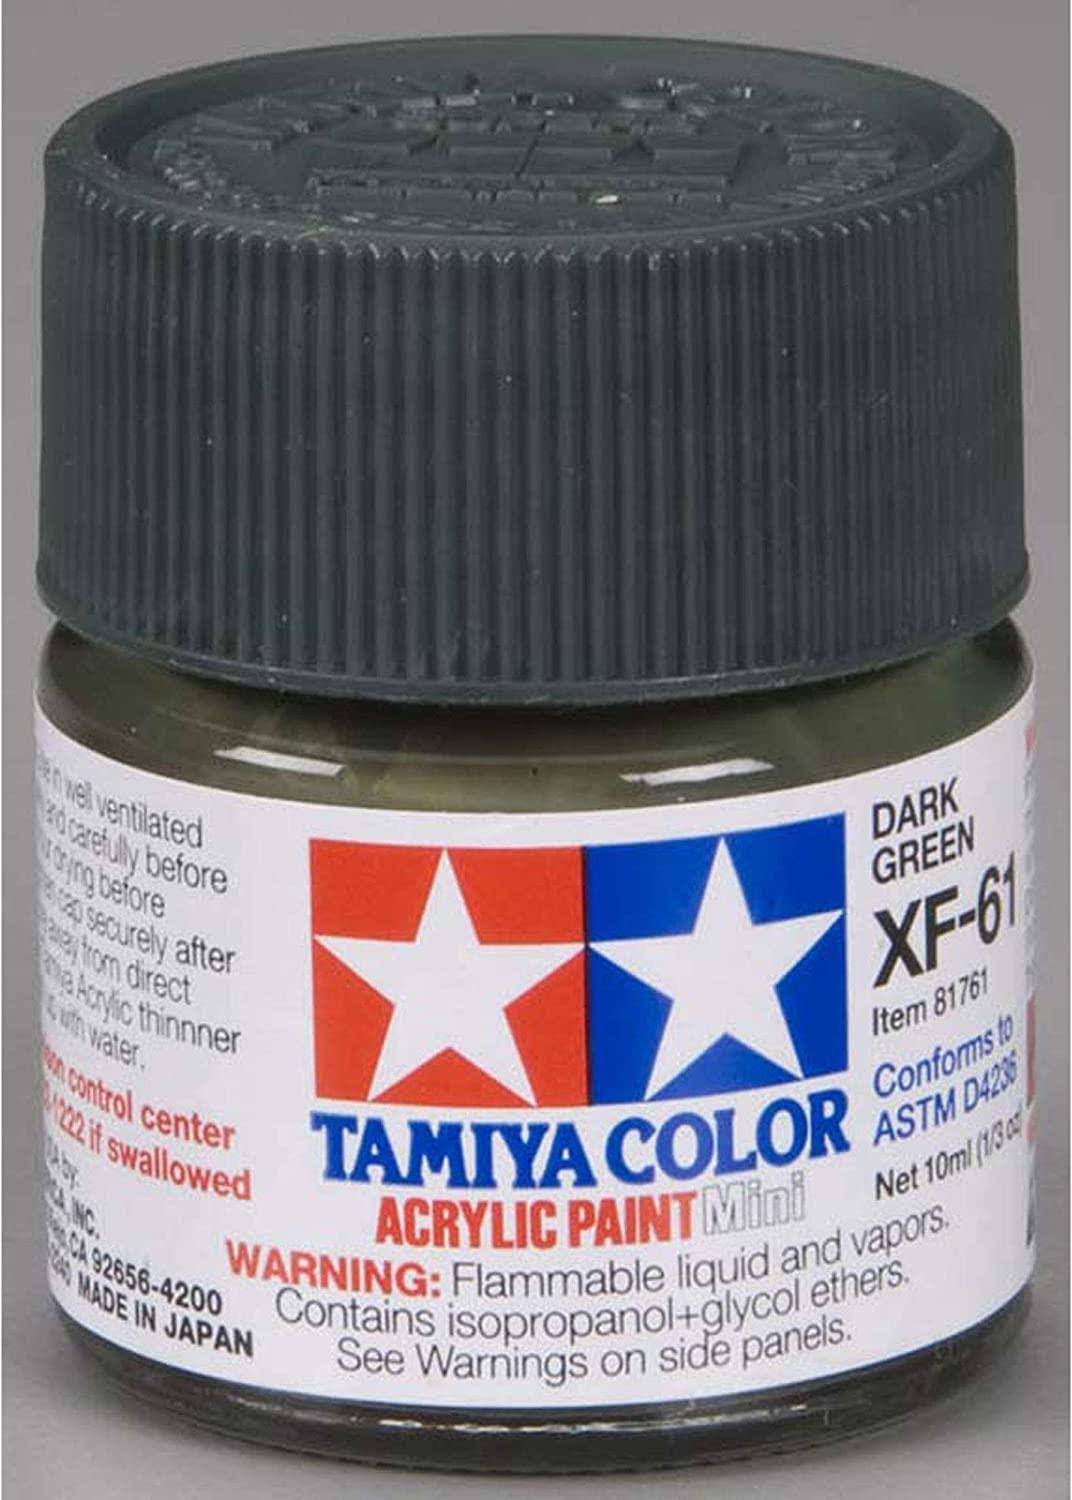 Tamiya Acrylic Mini XF-61 Dark Green Paint